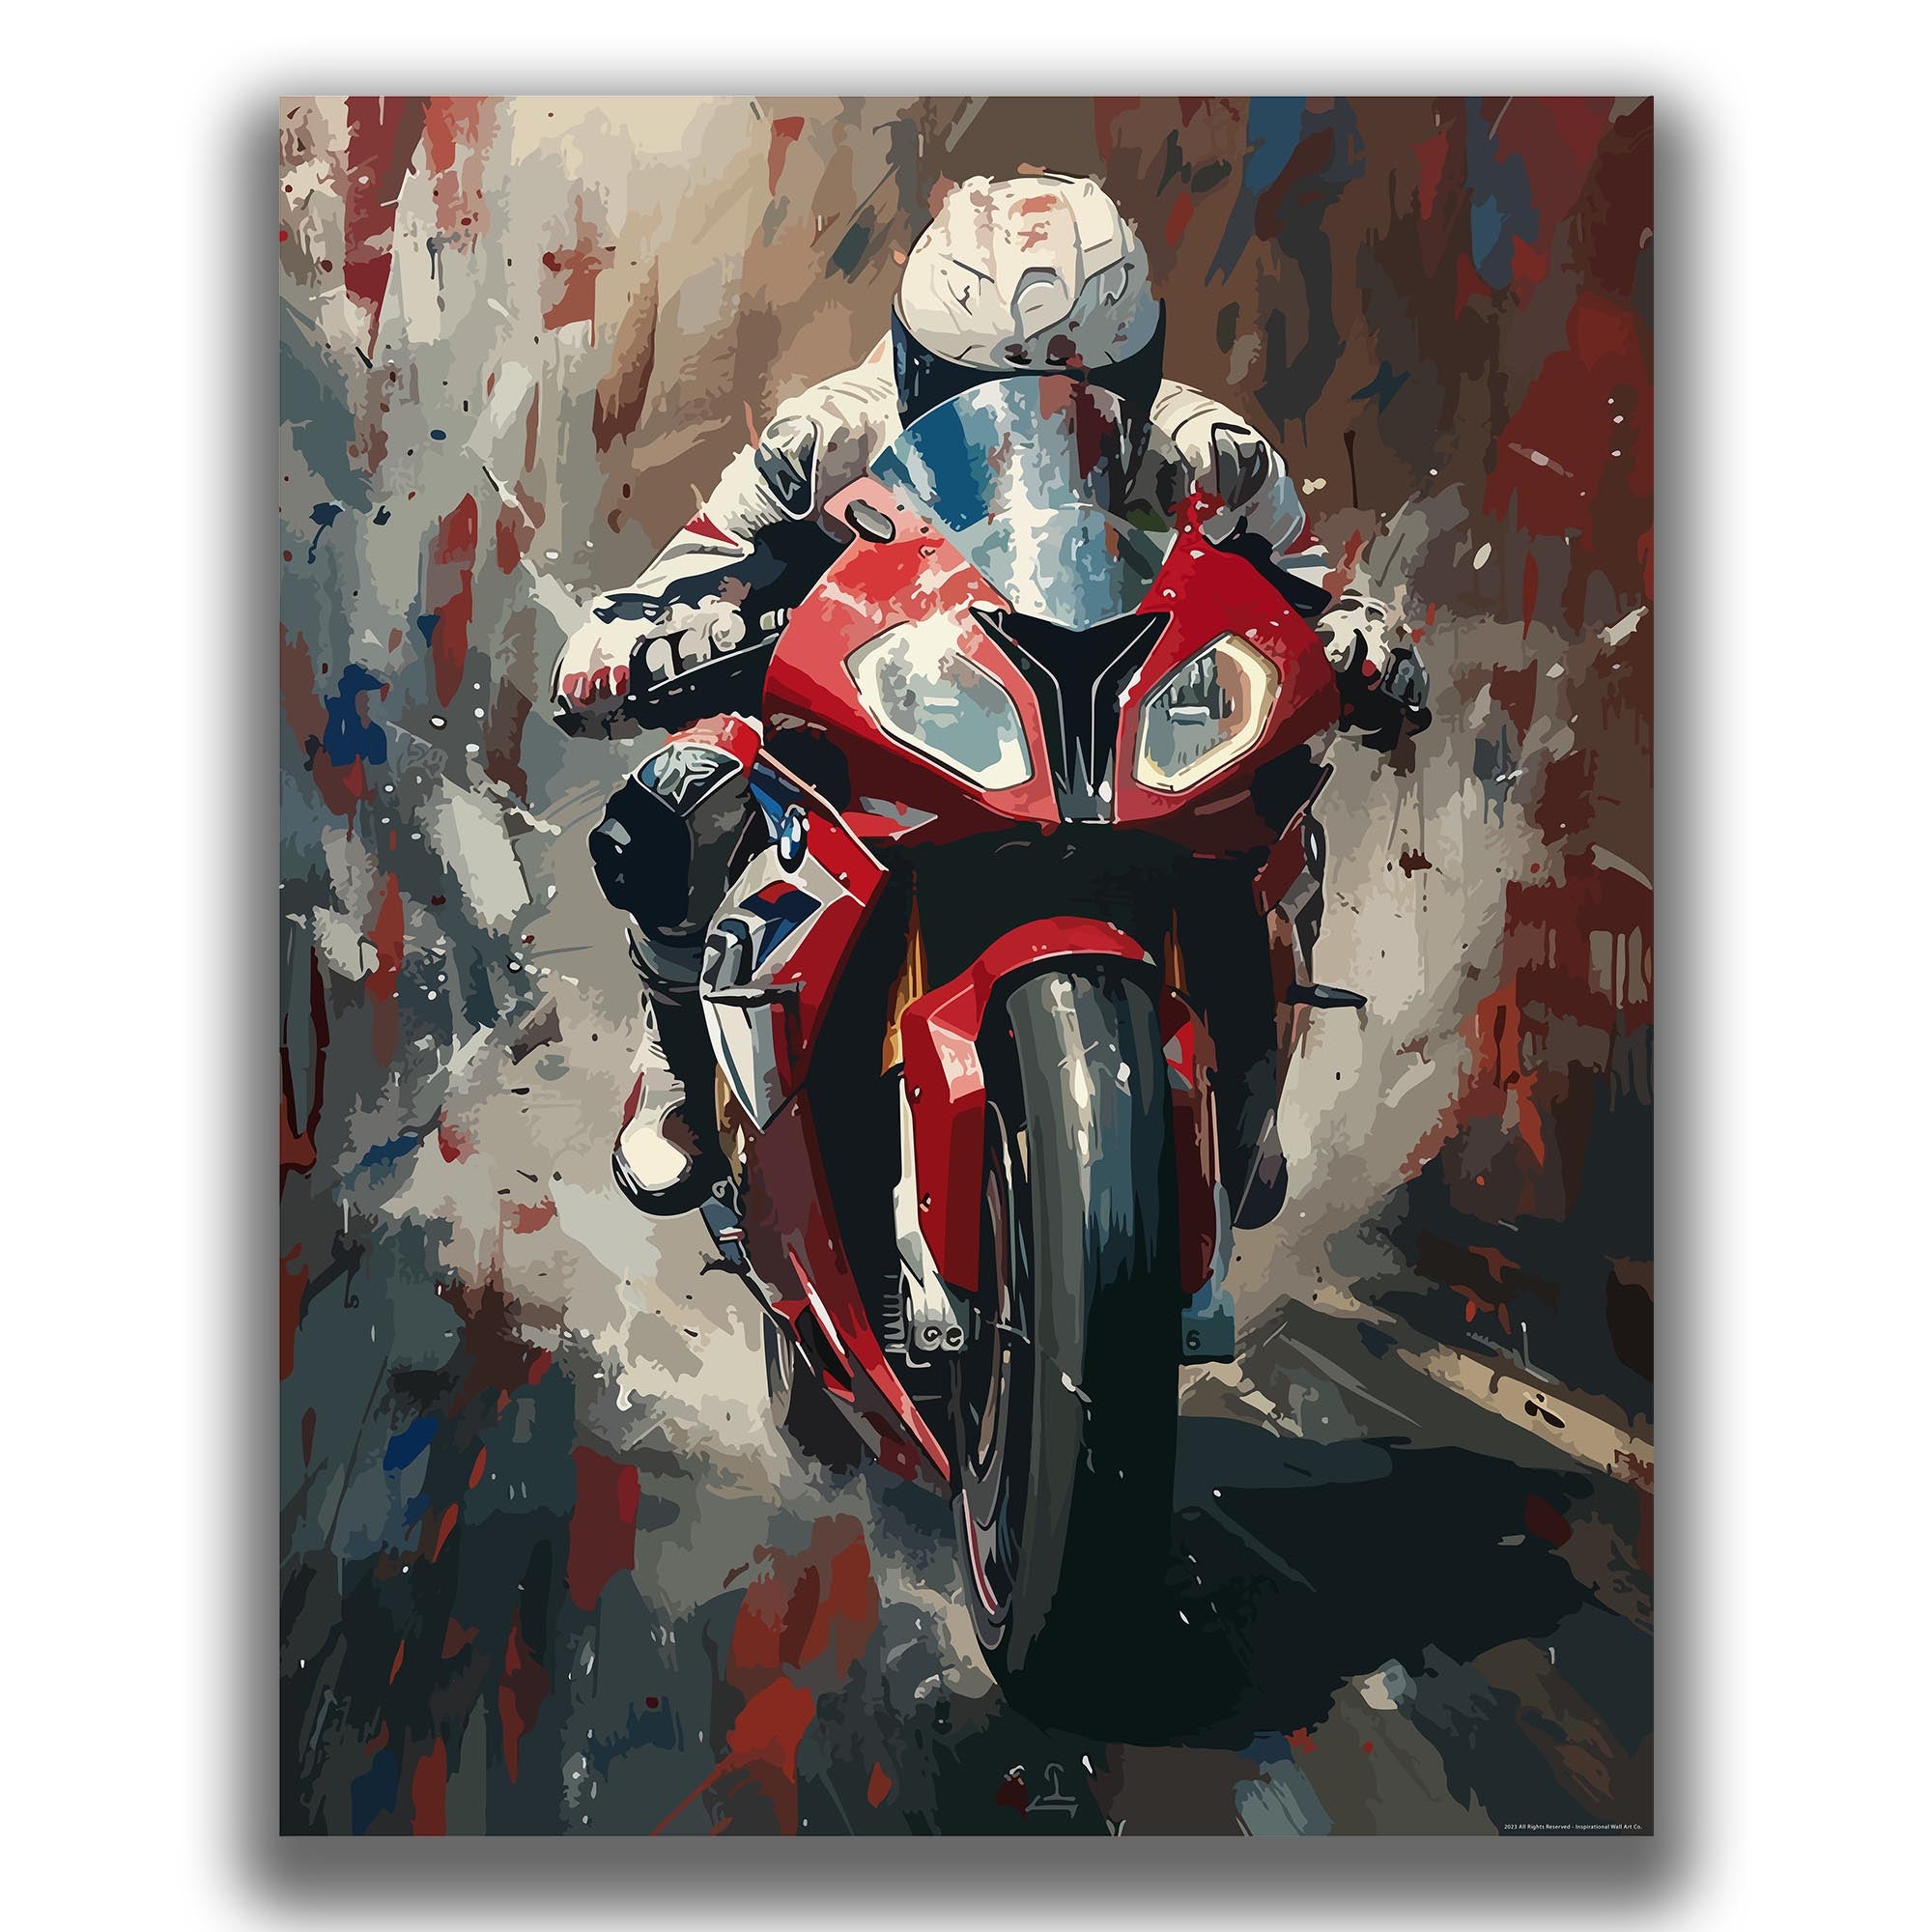 Sassy - Motorcycle Poster